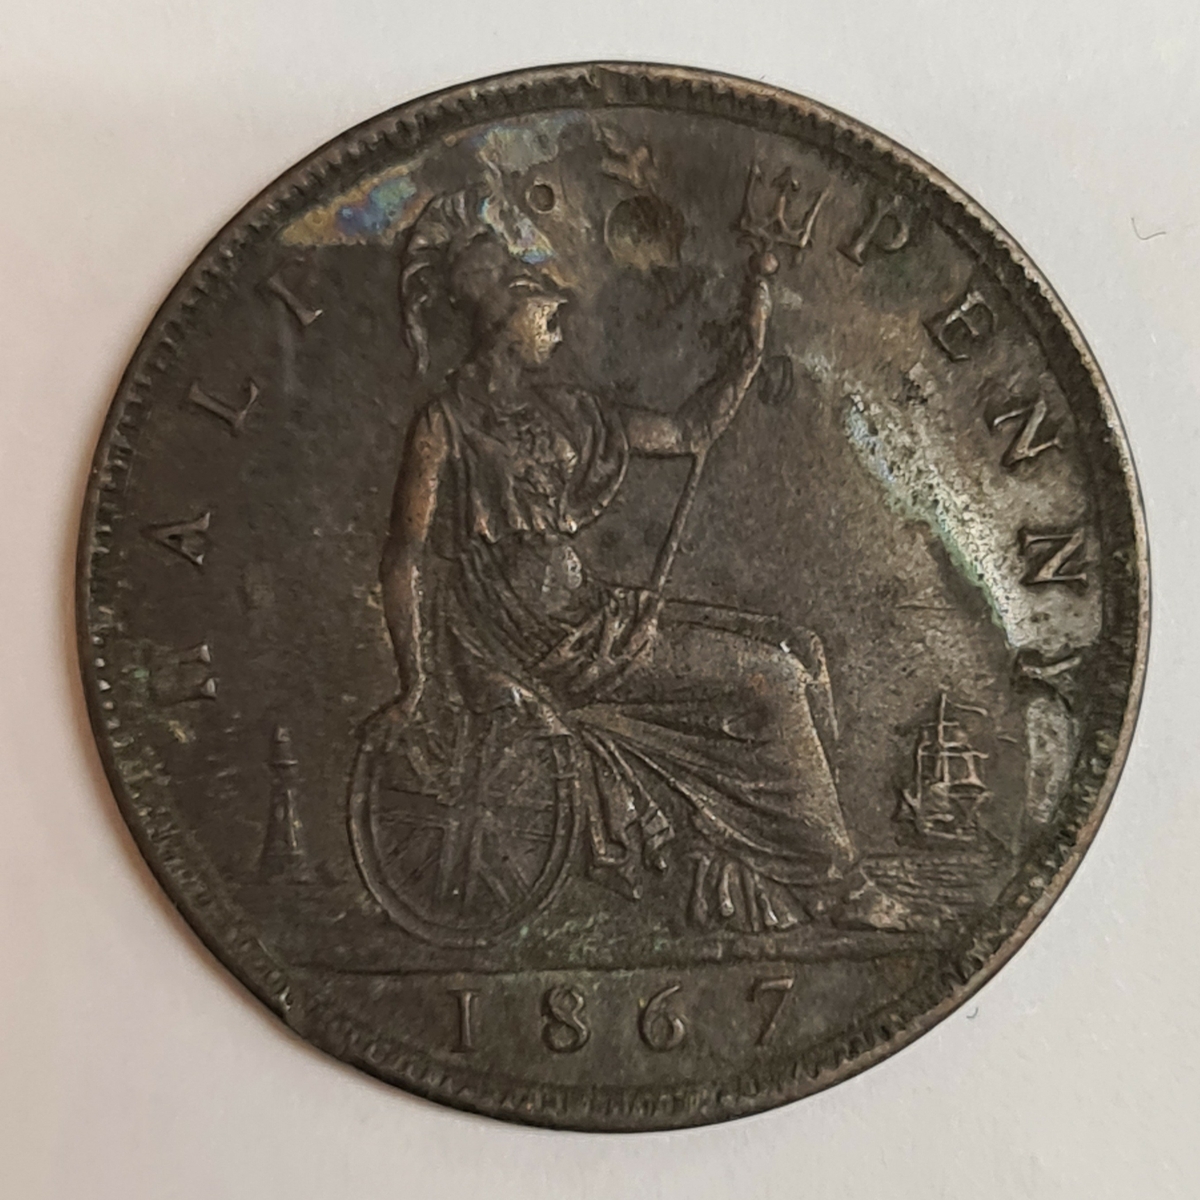 4 mynt från Storbritanien.
½ Penny, 1891
½ Penny, 1888
½ Penny, 1867
½ Penny, 1862